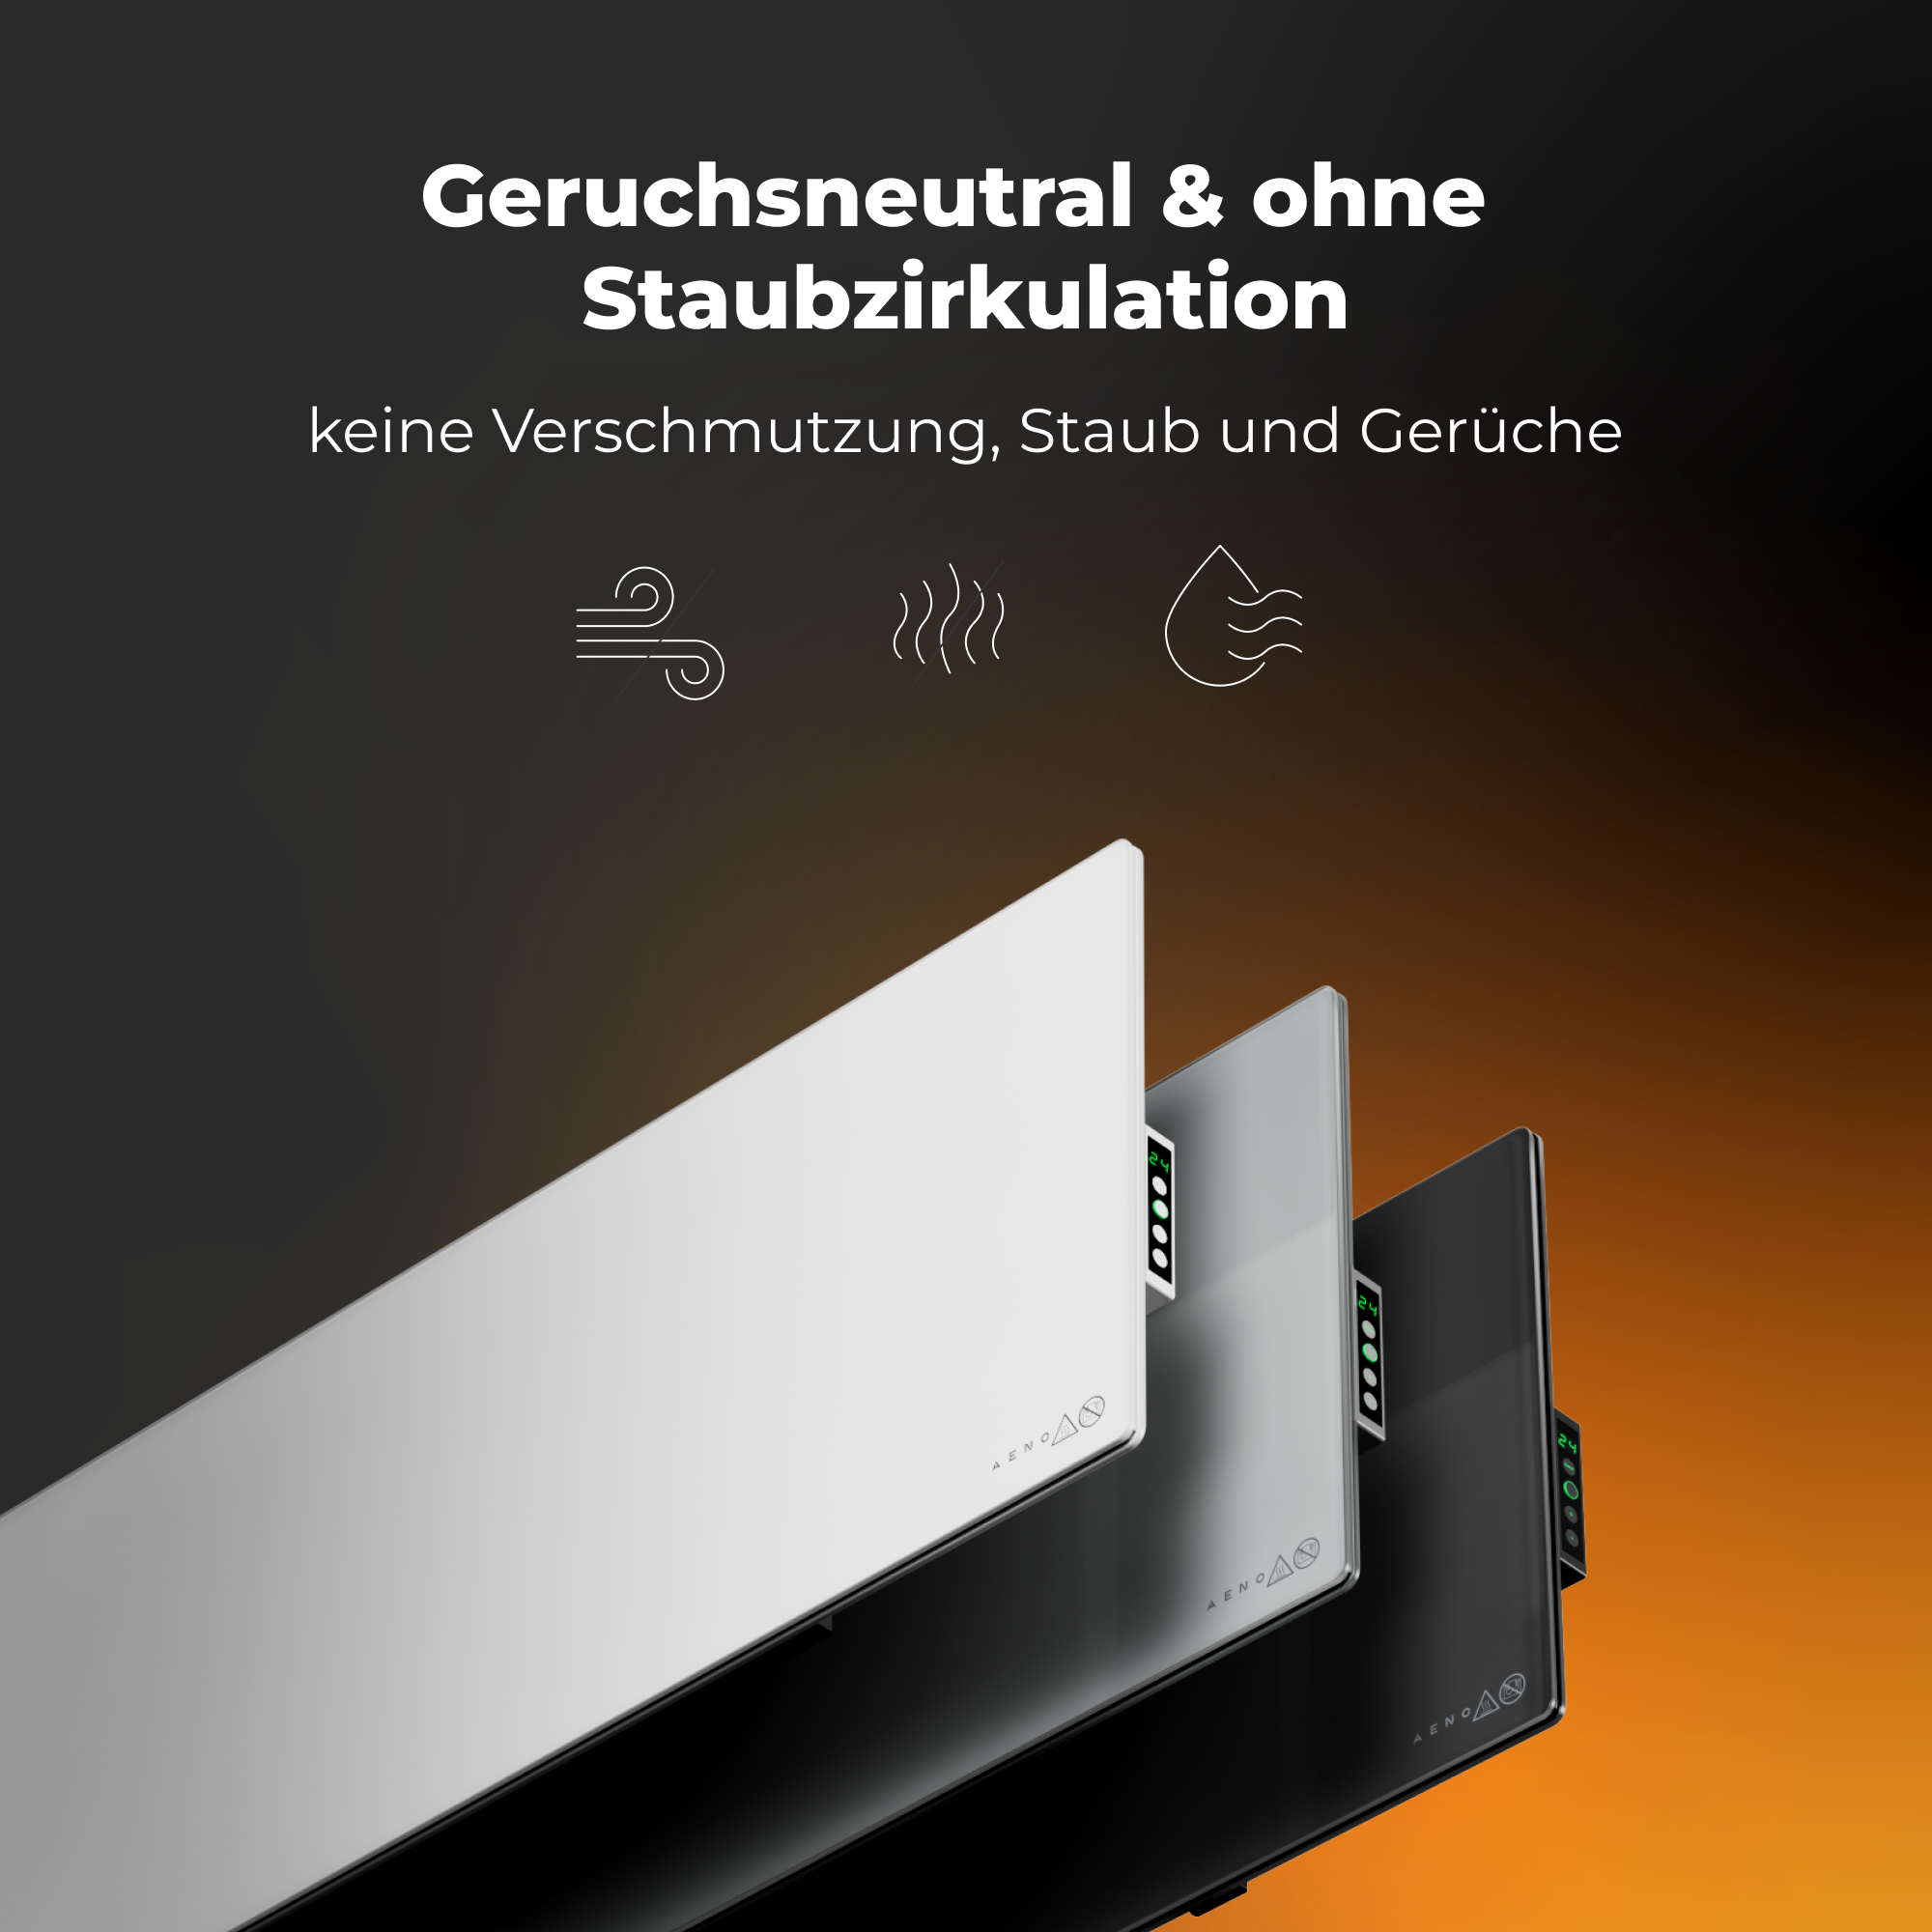 AENO Premium Watt) Infrarot-Heizstrahler gehärtetes Ultra (700 Eco LED-Heizung Steuerung, Glas, energiesparend, Wi-Fi GH5S, Smart dünn